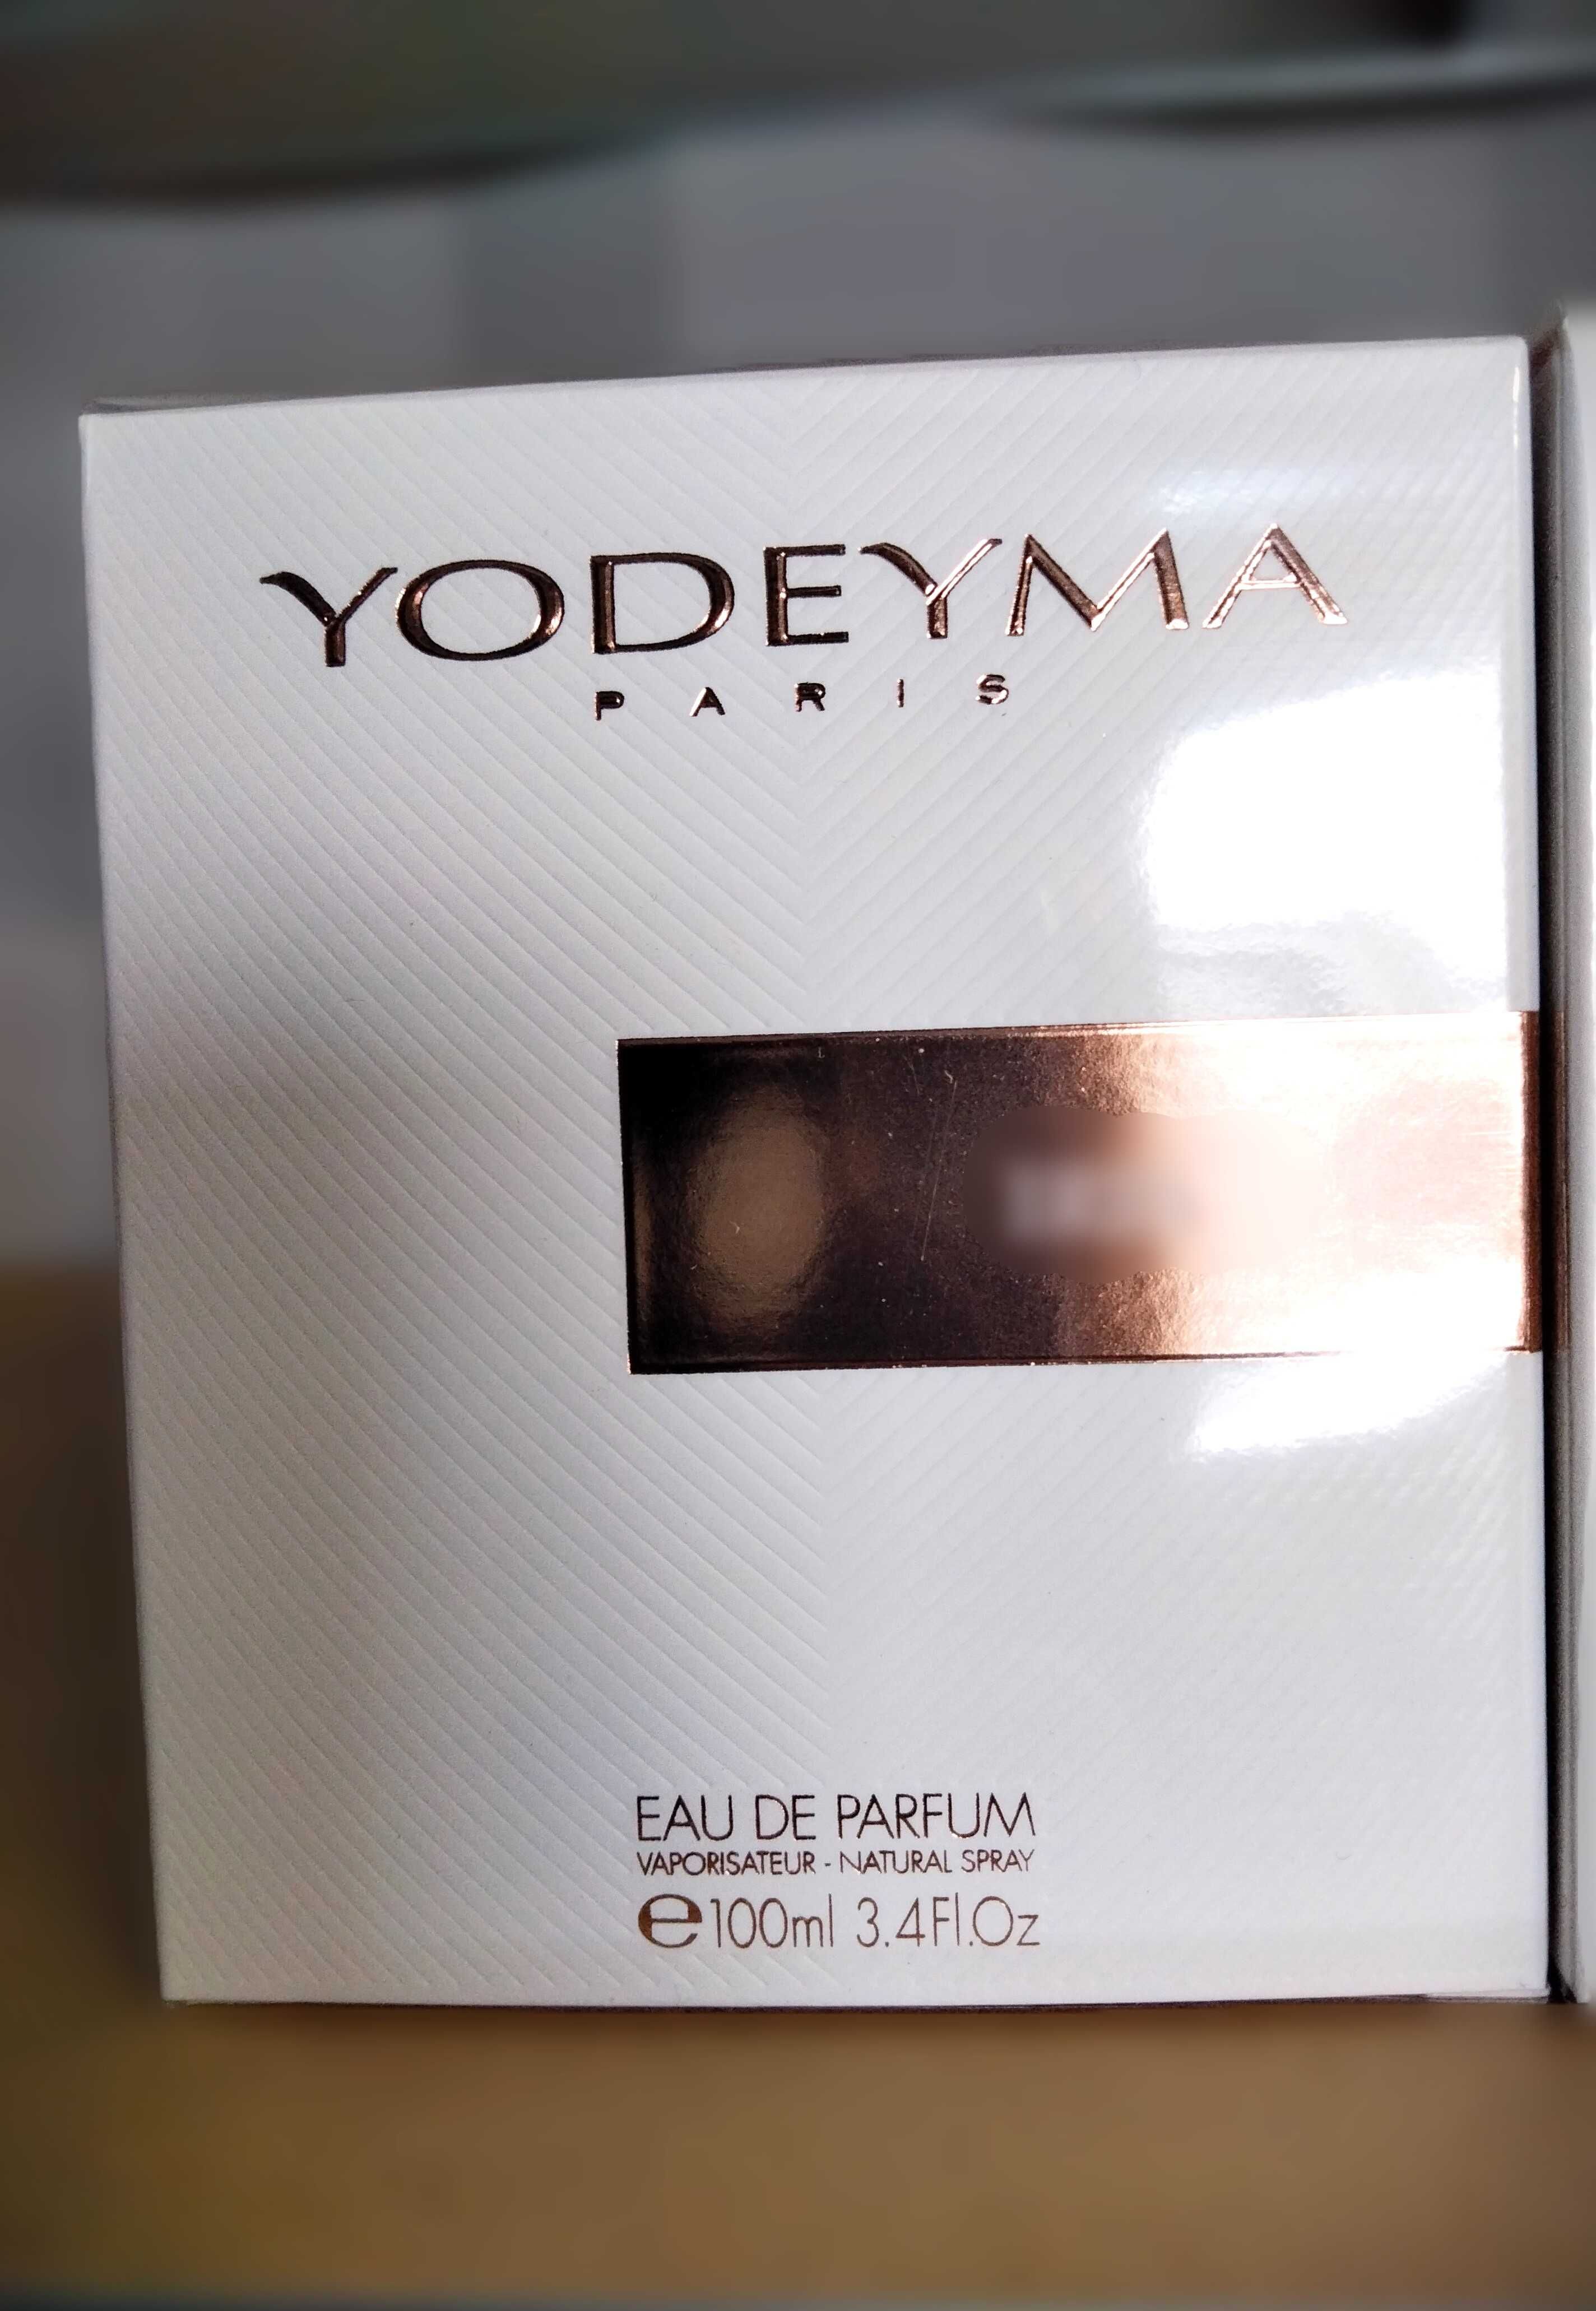 Yodeyma Eau de Parfum CHEANTE/ COCO MADEMOISELLE Chanel 100ml EDP